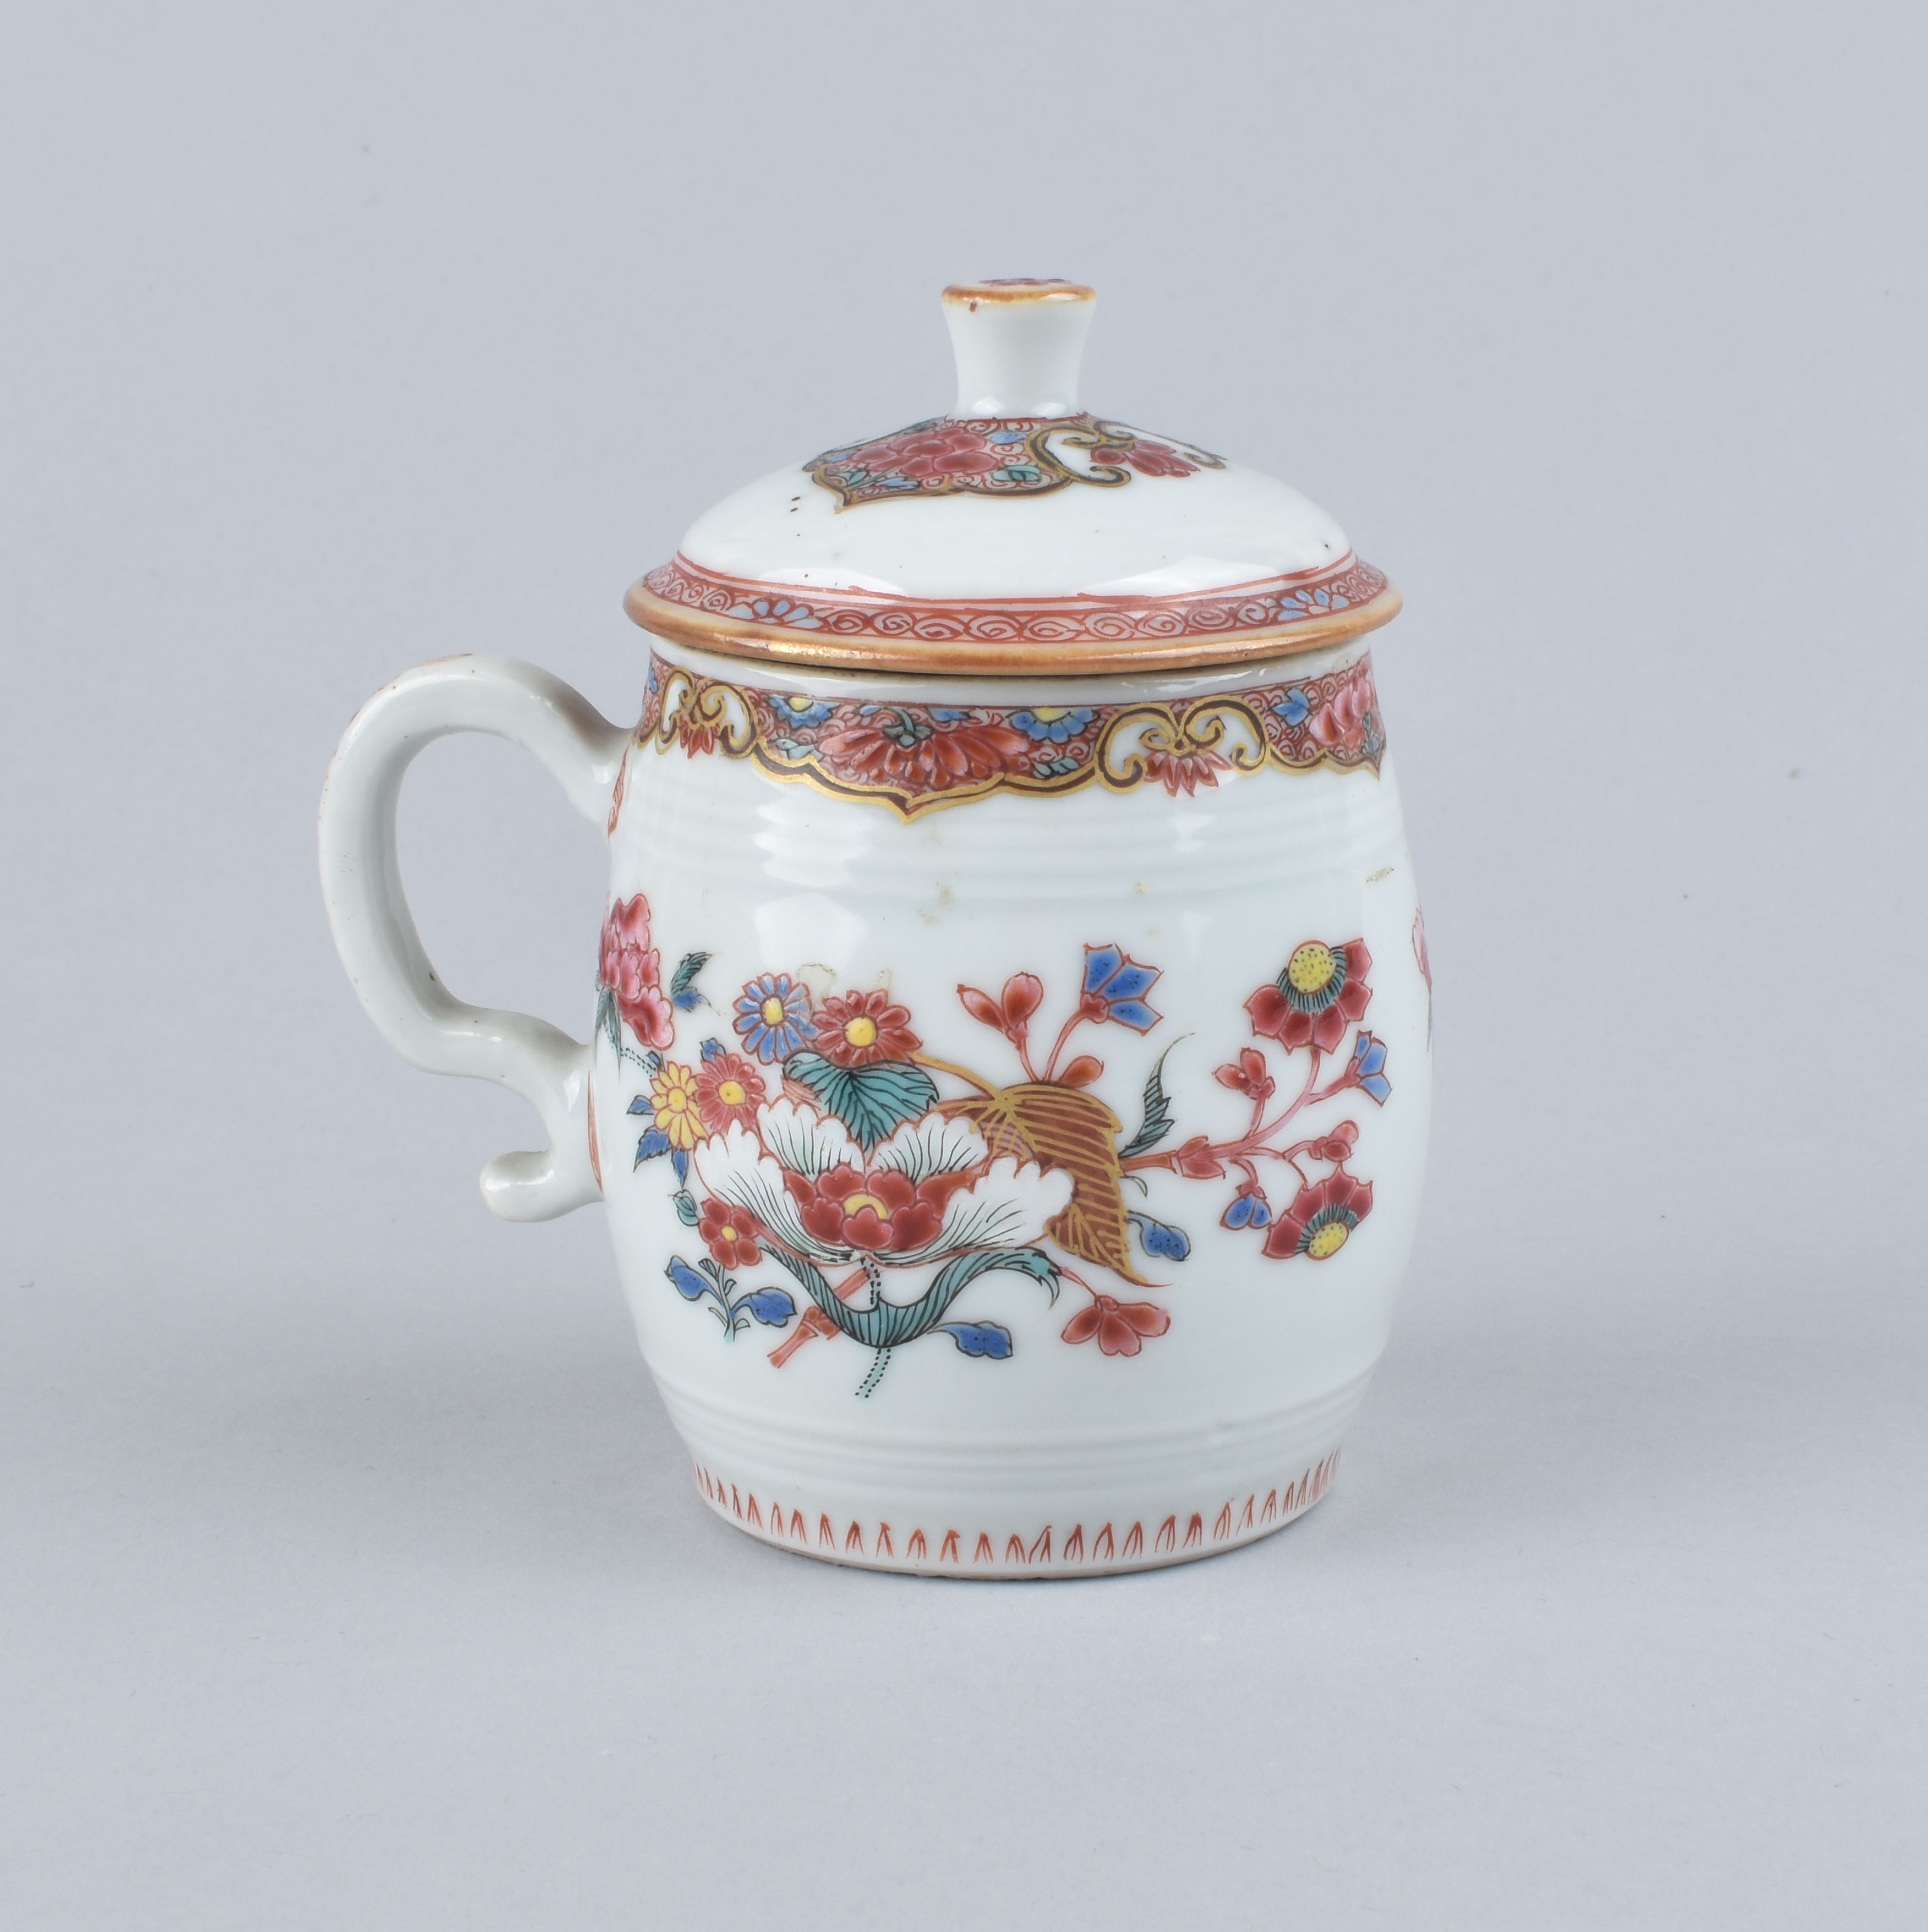 Famille rose Porcelaine Qianlong (1735-1795), circa 1750, Chine